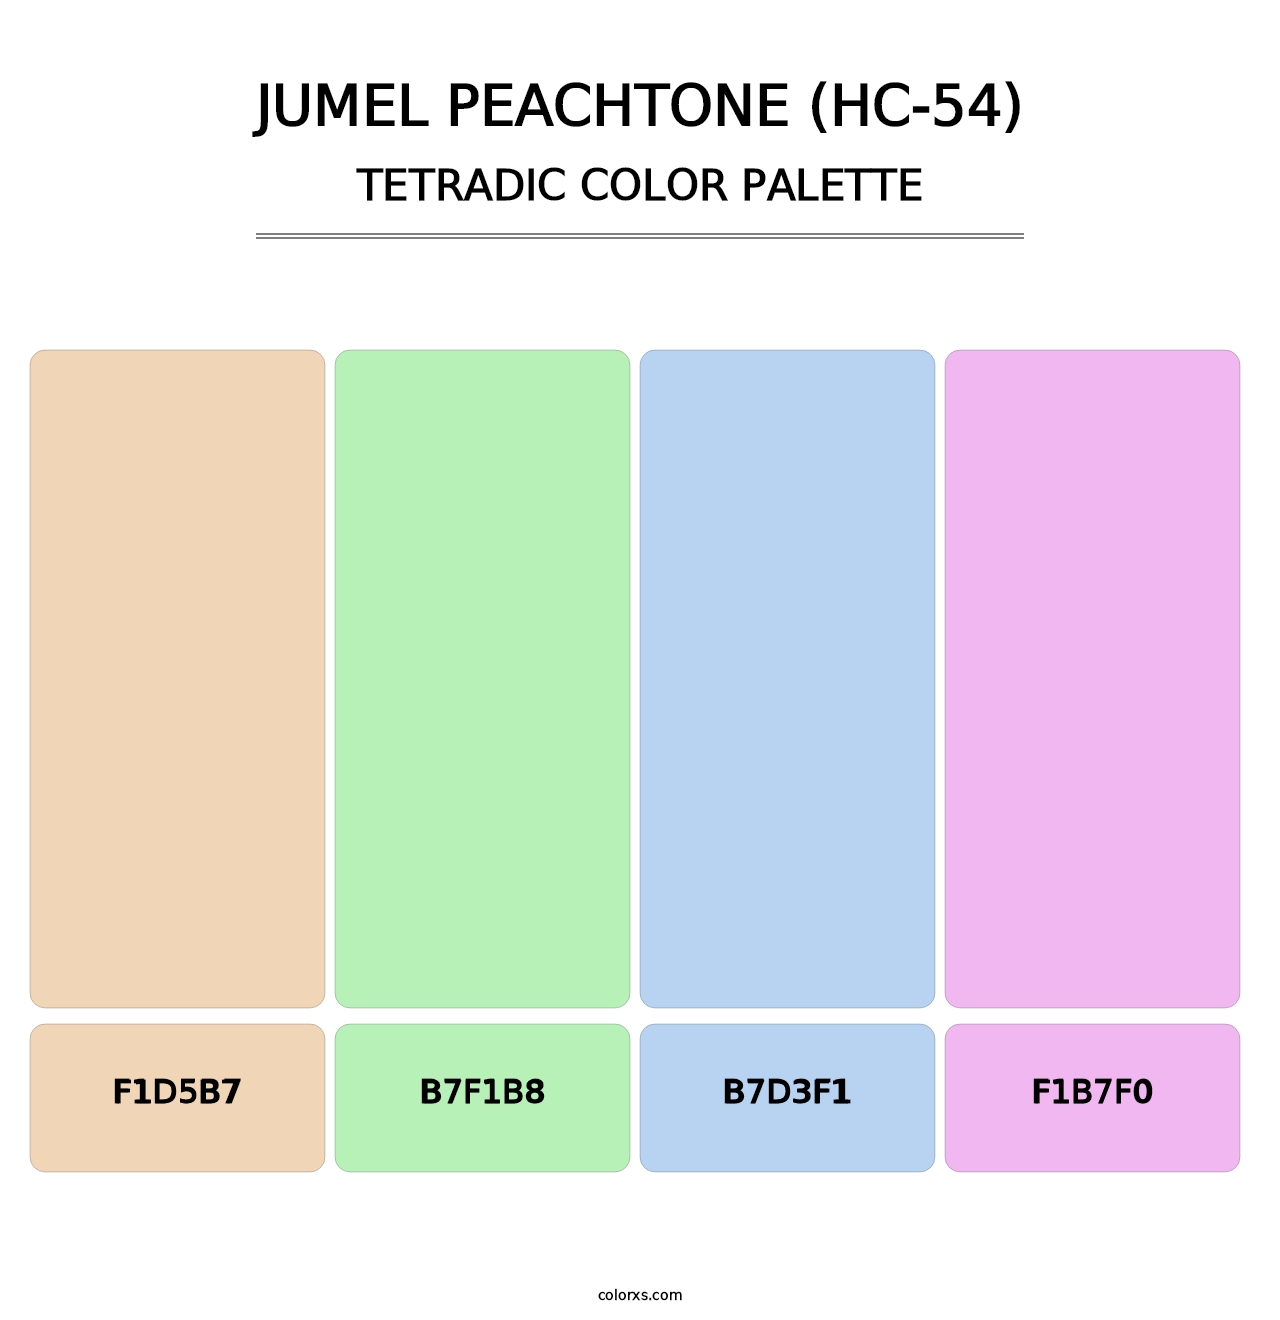 Jumel Peachtone (HC-54) - Tetradic Color Palette